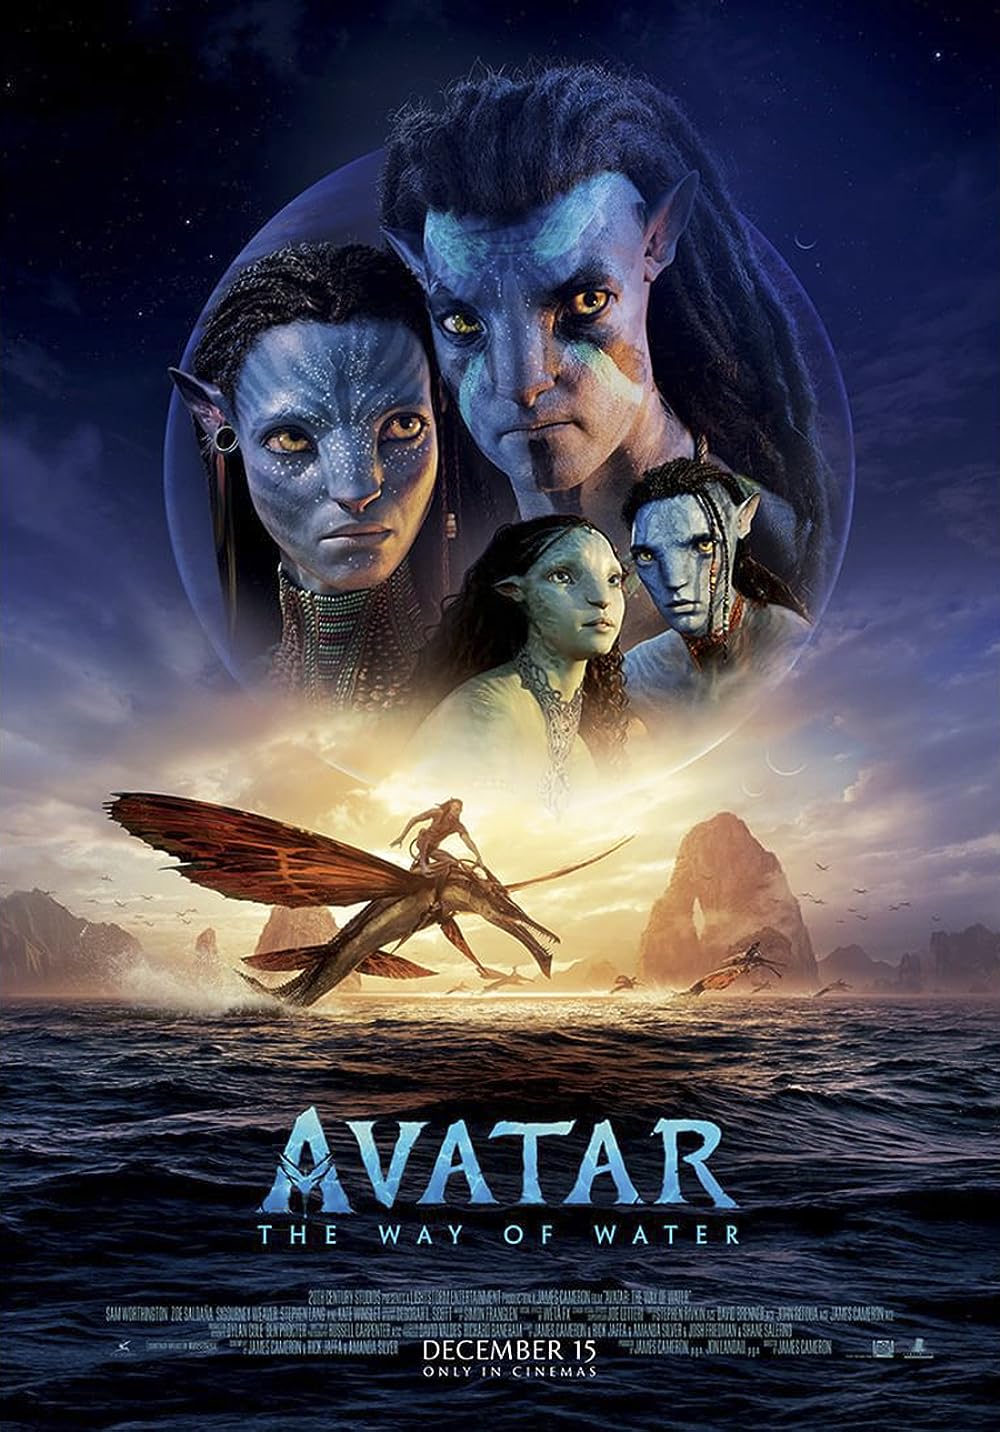 Stiahni si 3D Filmy Avatar: Cesta vody / Avatar: The Way of Water 3D (HSBS)(SK/CZ/EN)(2022) = CSFD 80%